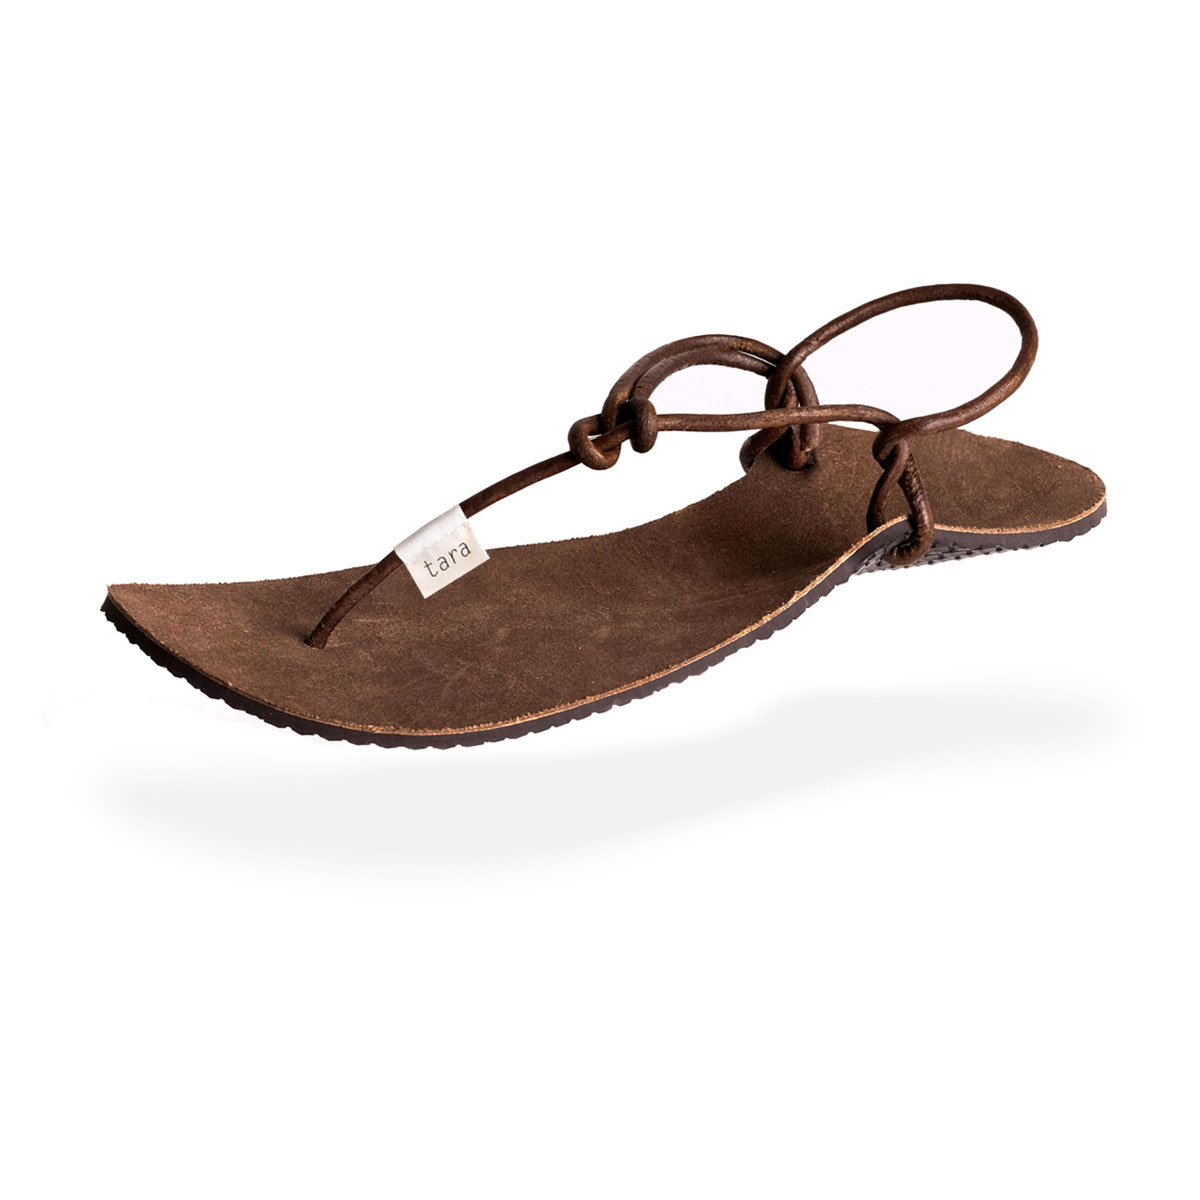 Summer barefoot TARA sandals package – Barefoot TARA sandals